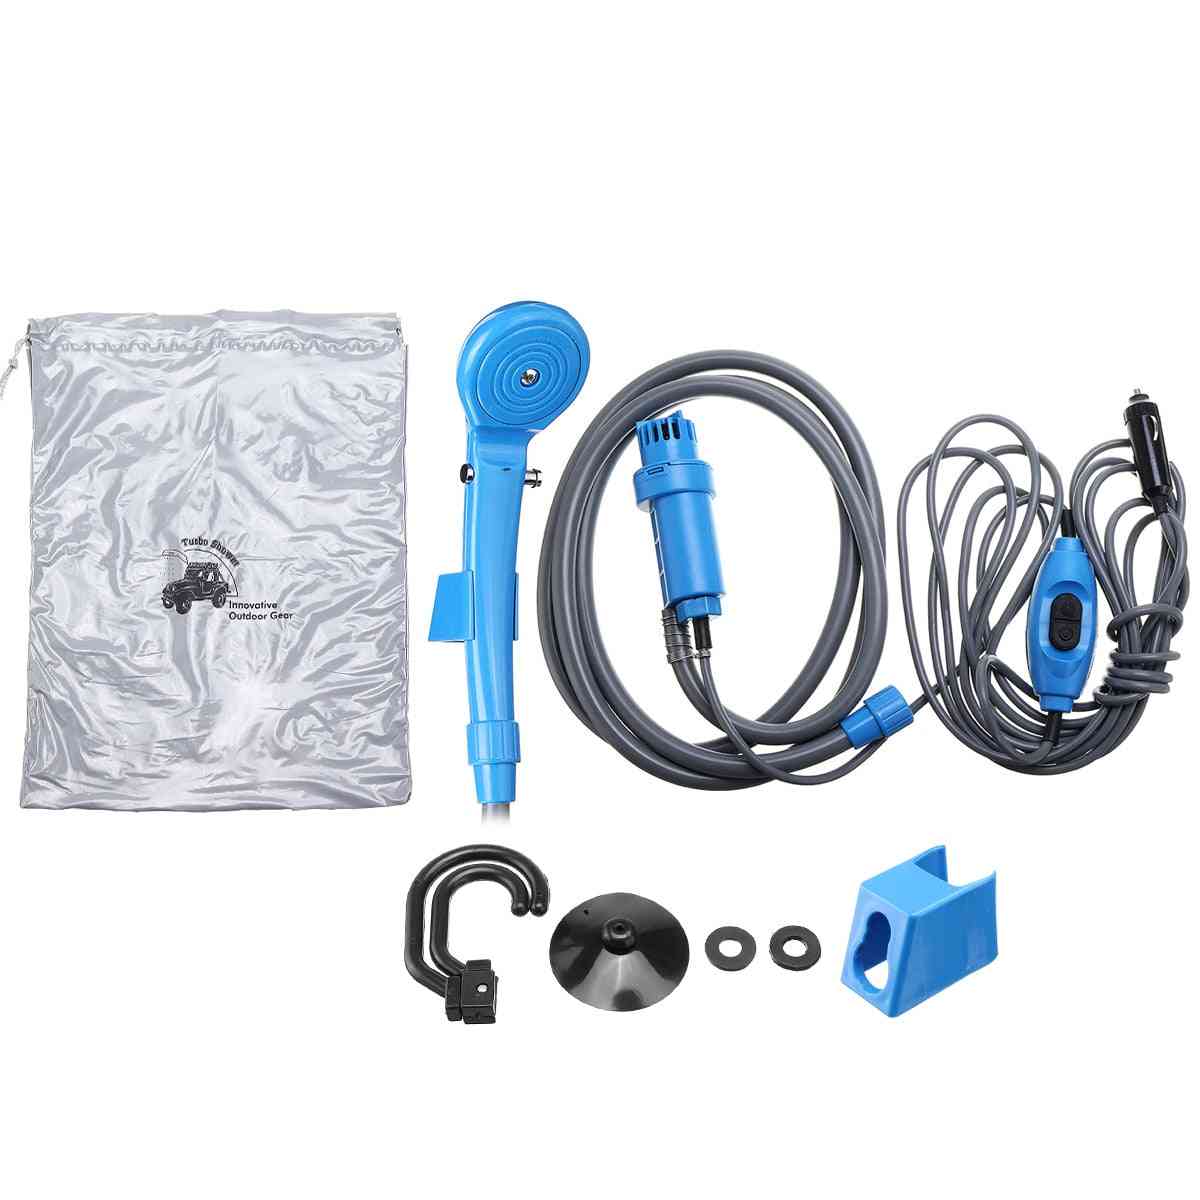 Portable Car Washer, Camping Shower, High Pressure Set